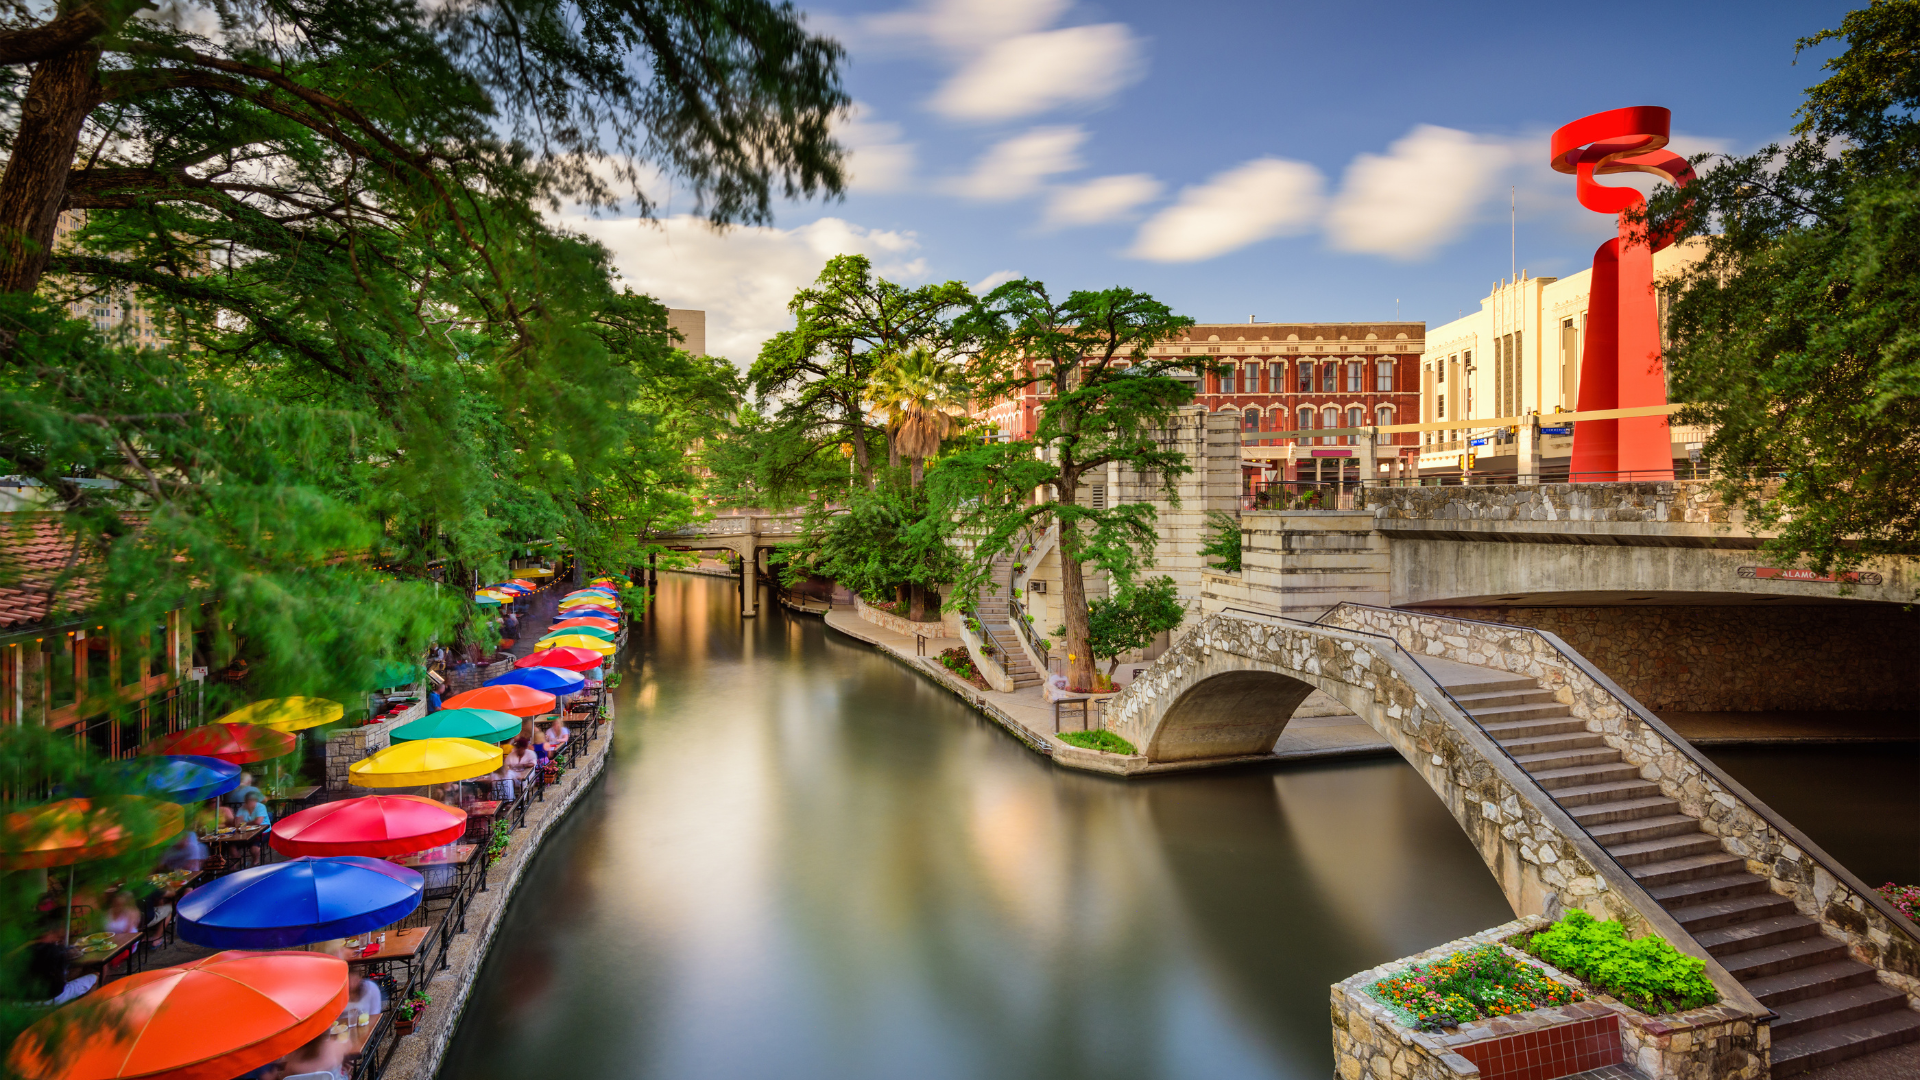 San Antonio riverwalk featuring colorful umbrellas at restaurant, trees and walking bridge